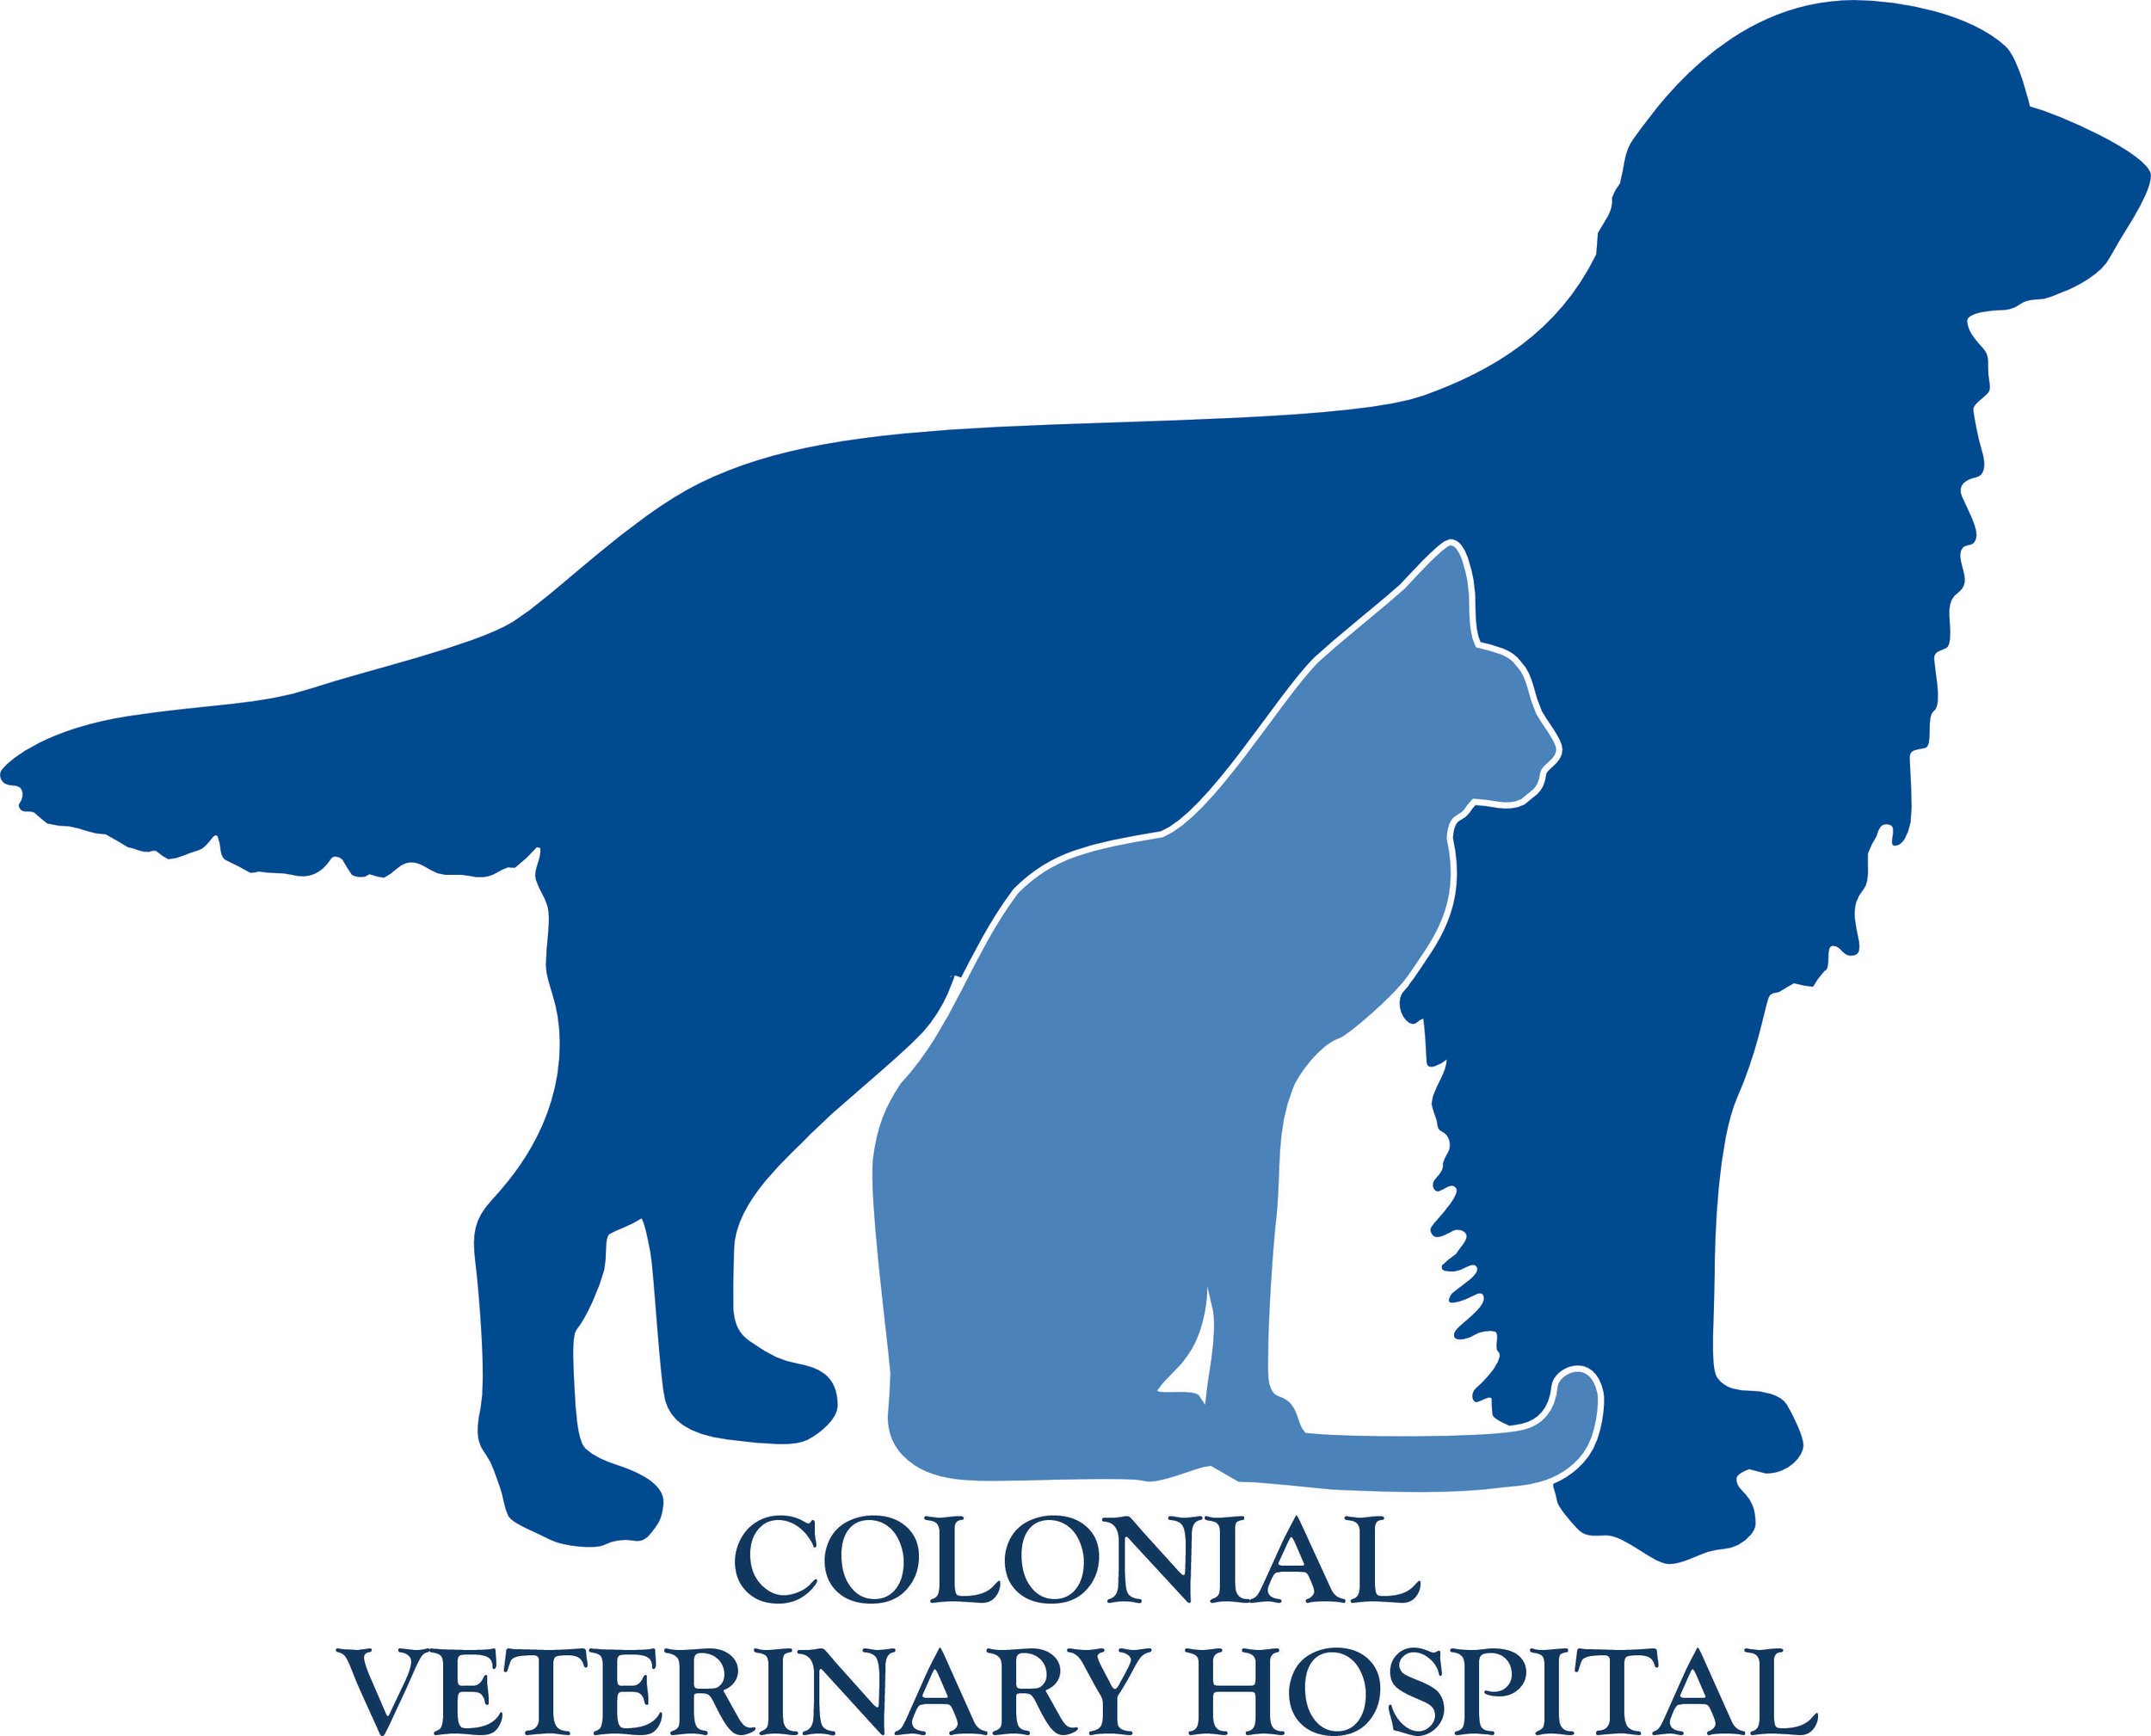 Colonial Veterinary Hospital Logo.jpg